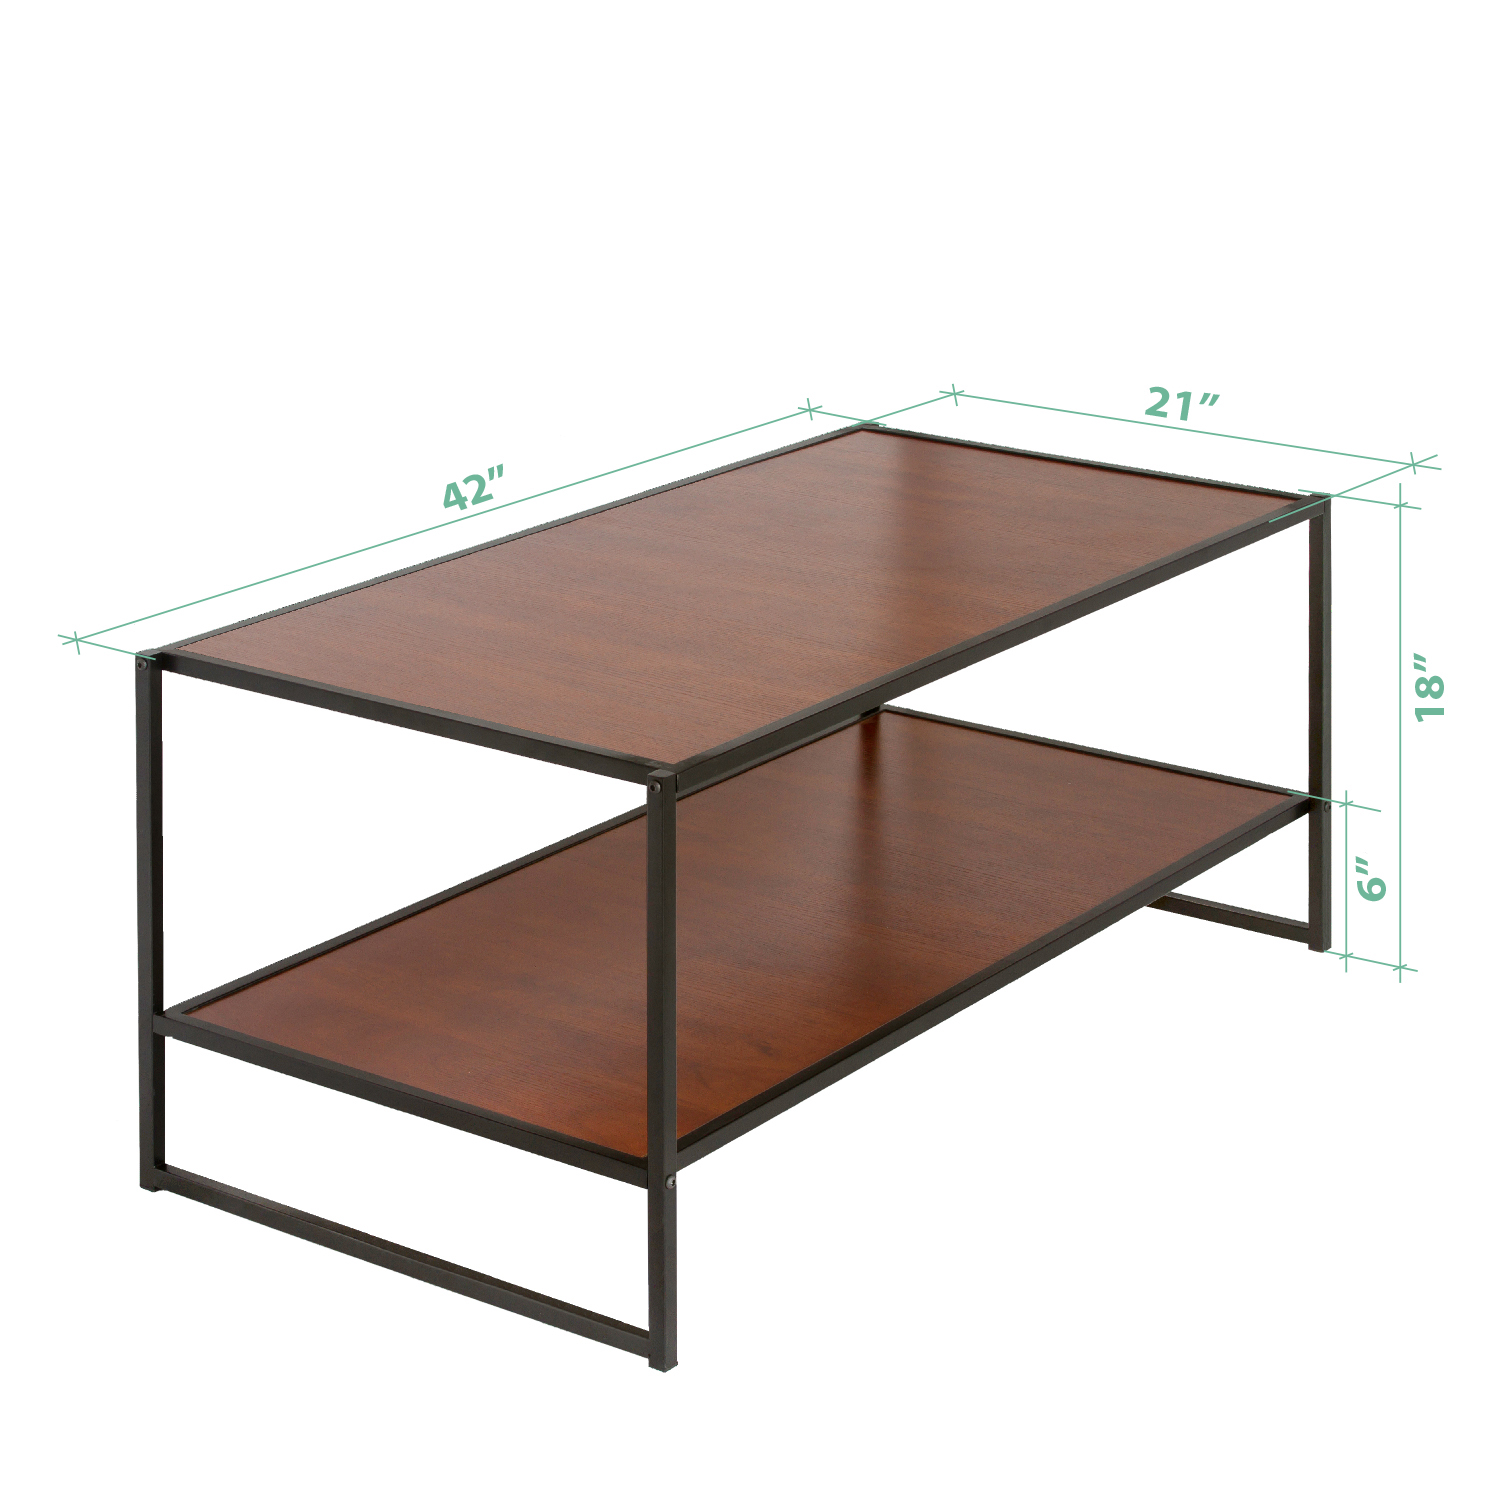 Zinus Modern Studio Collection Deluxe Rectangular Coffee Table